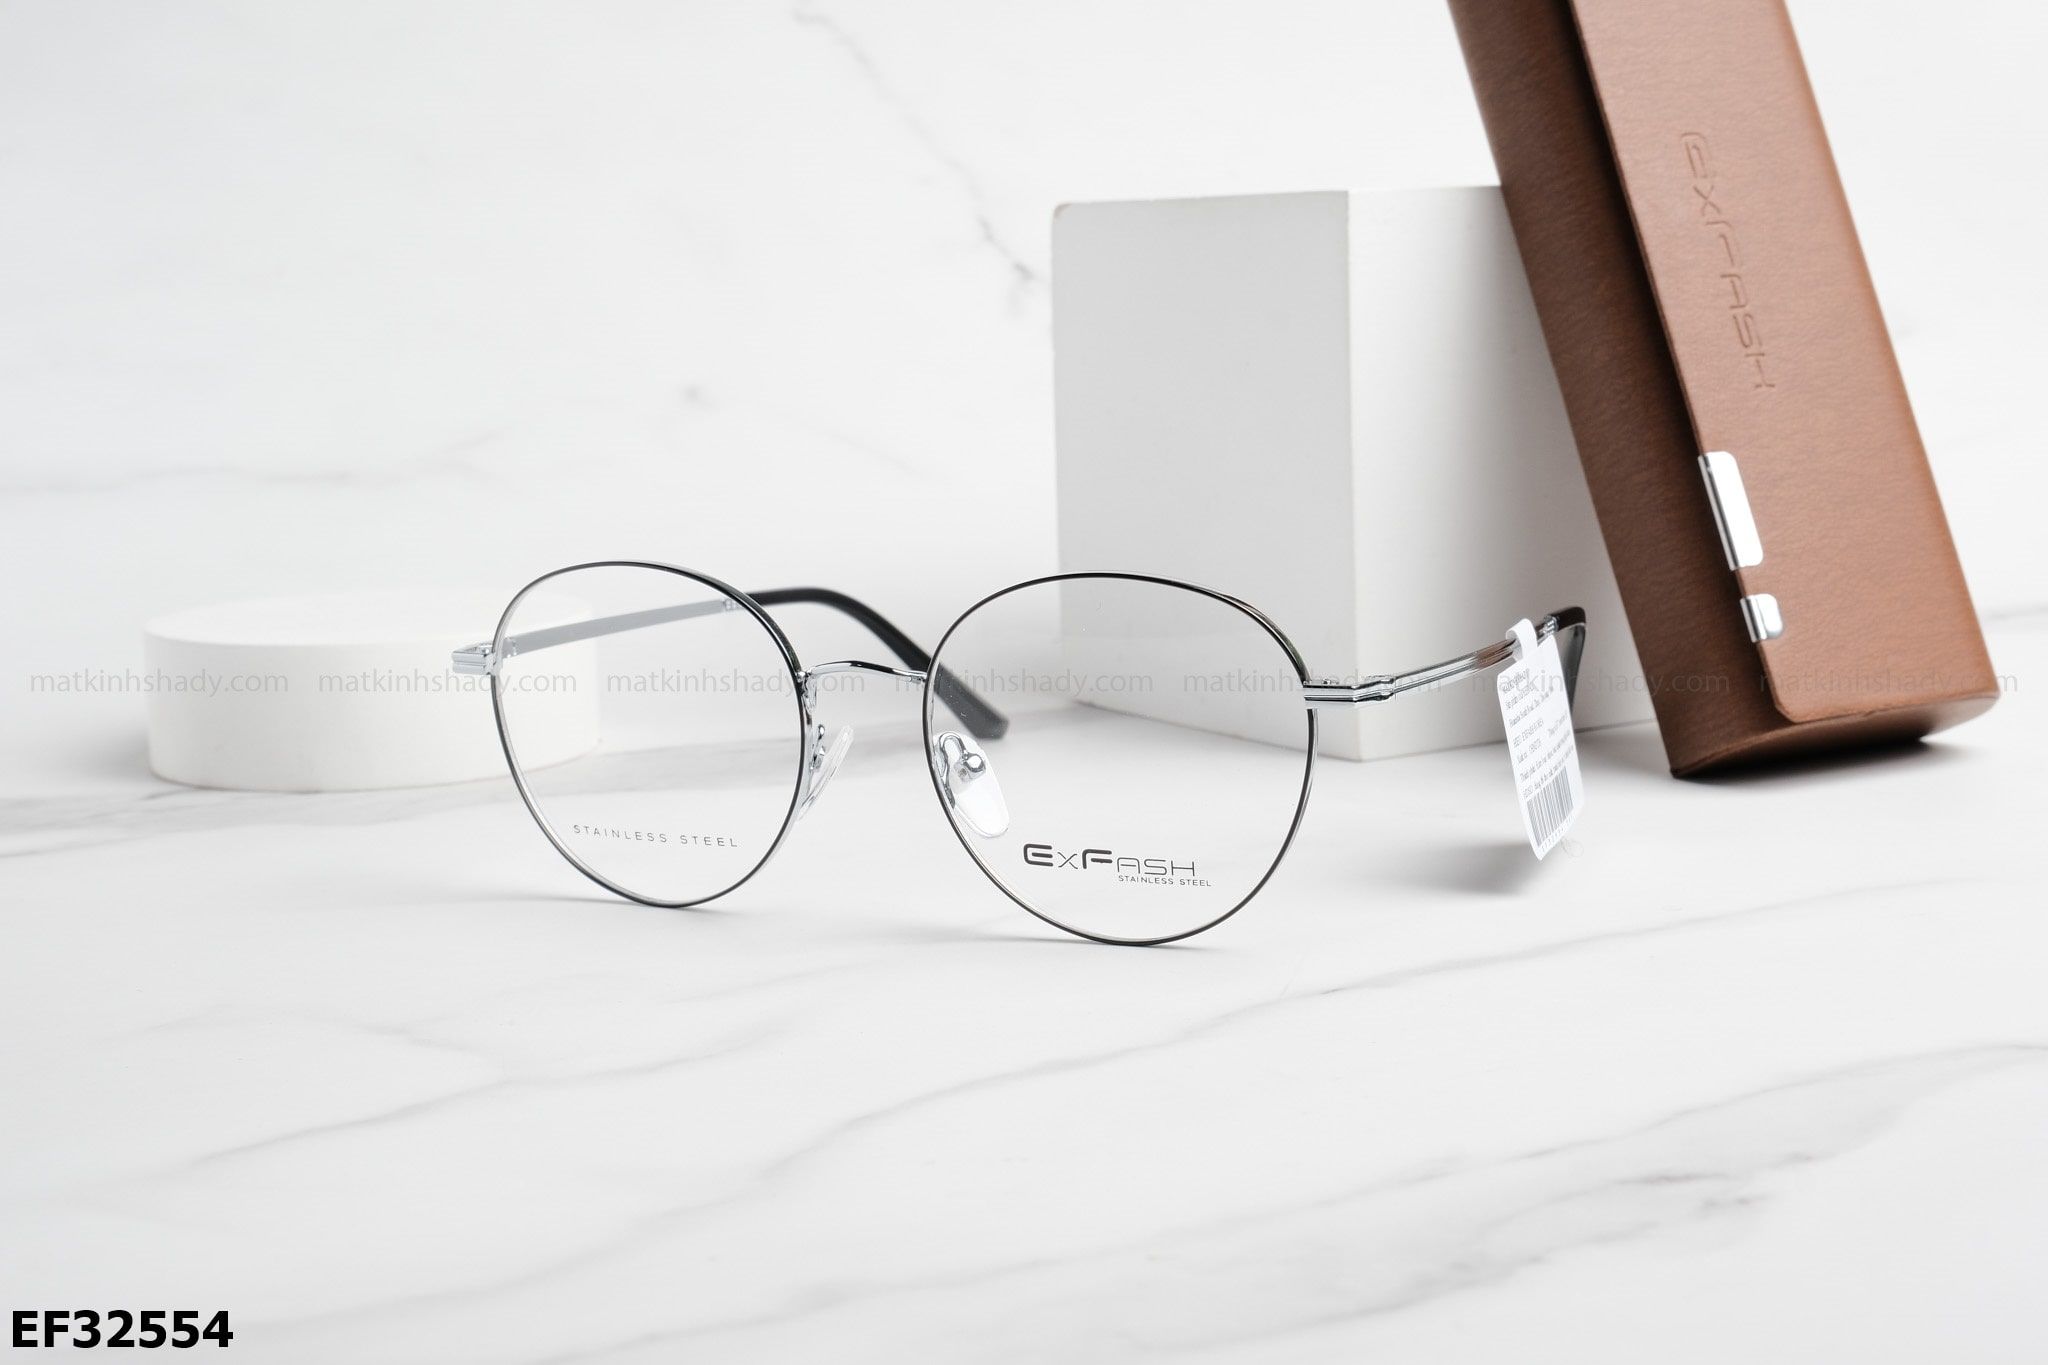  Exfash Eyewear - Glasses - EF32554 